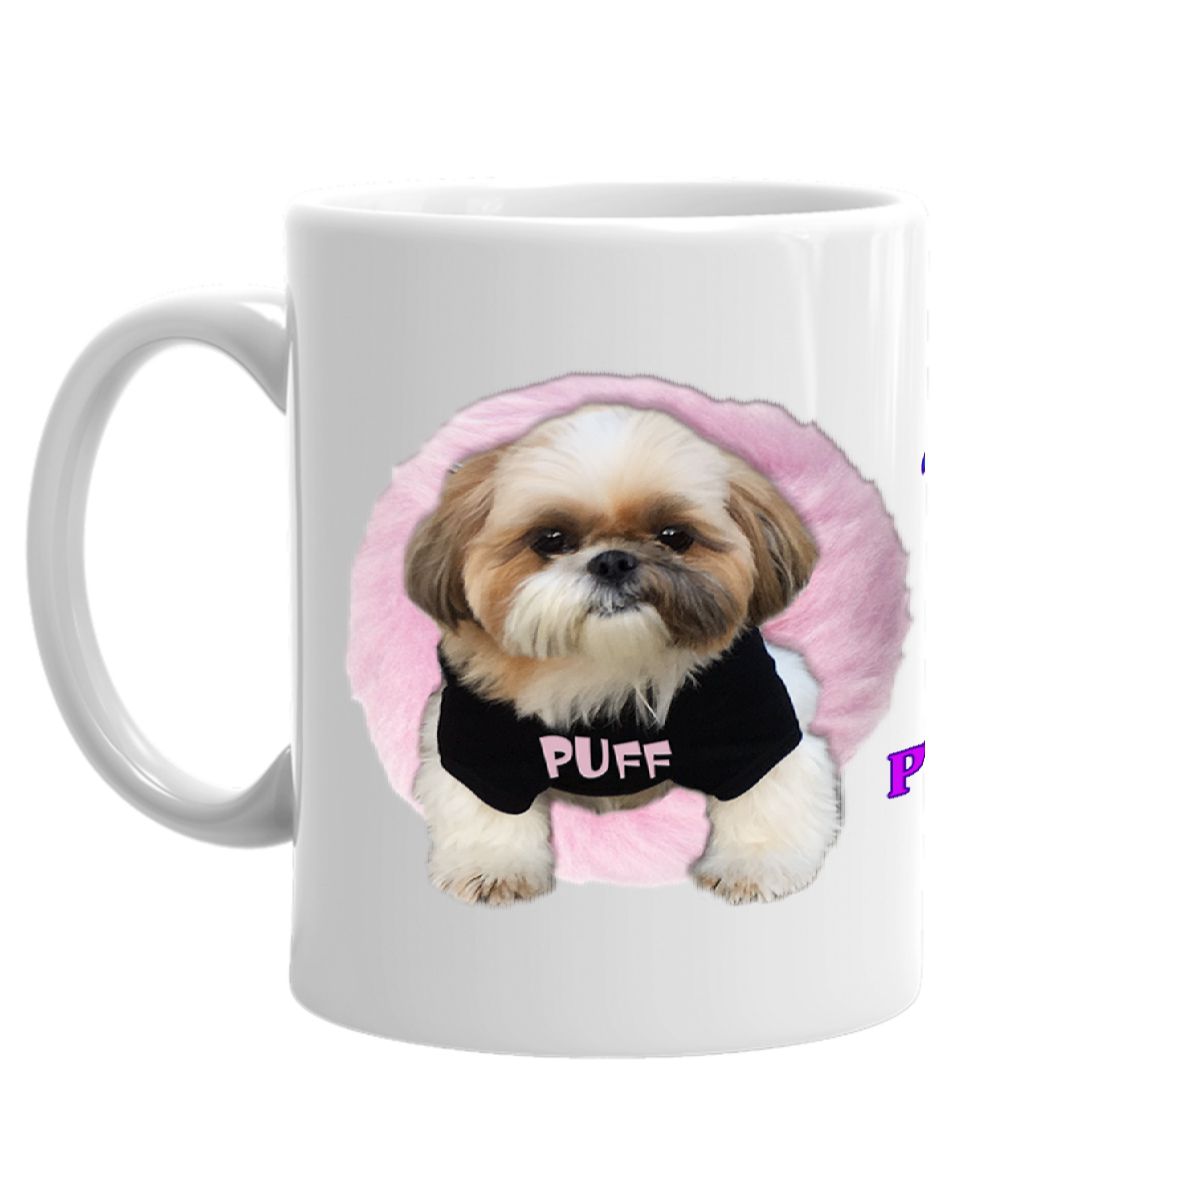 Official PUFF Mug